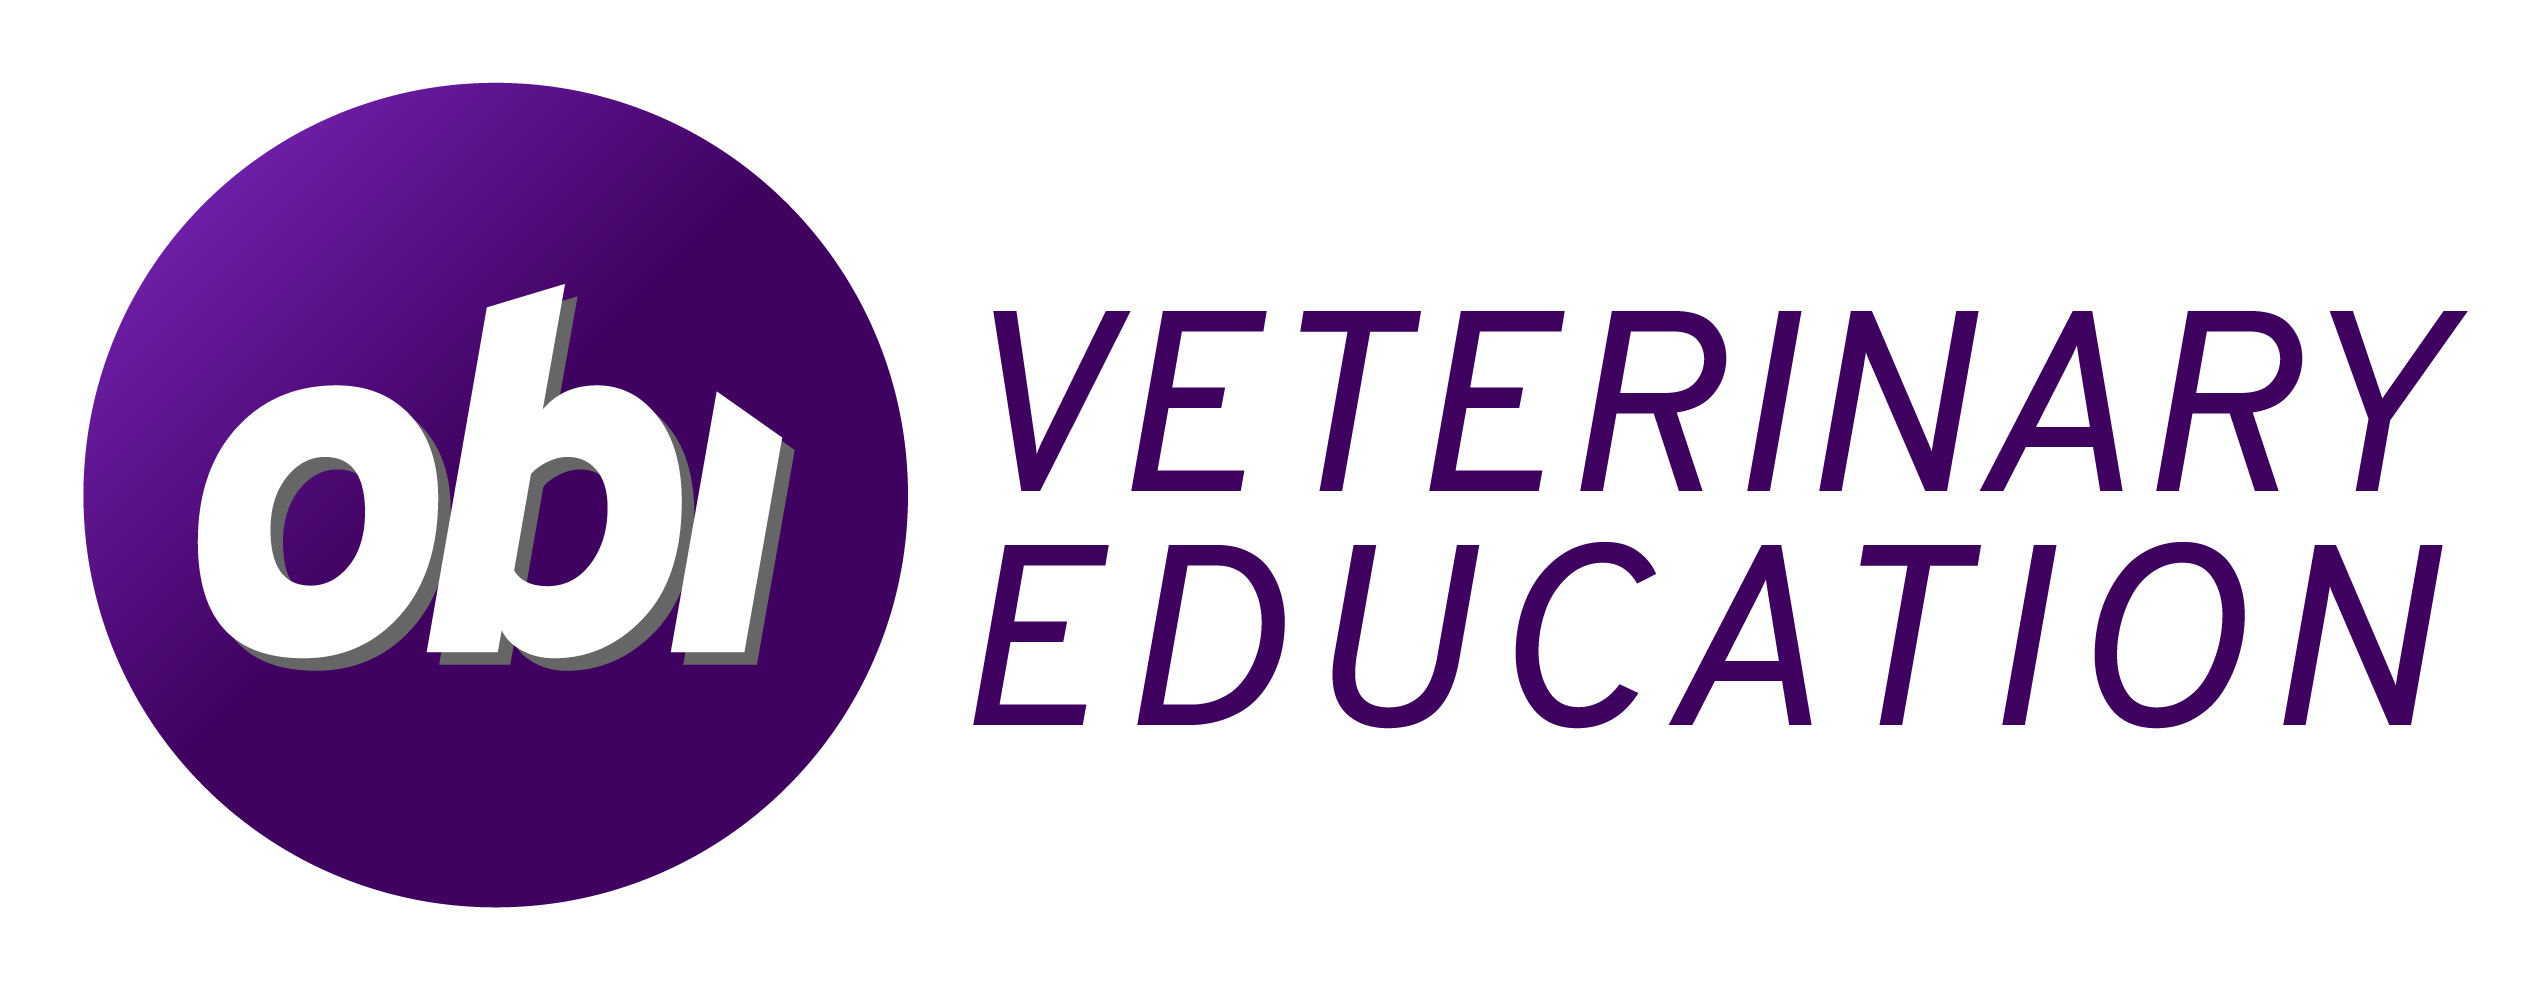 Obi Veterinary Education